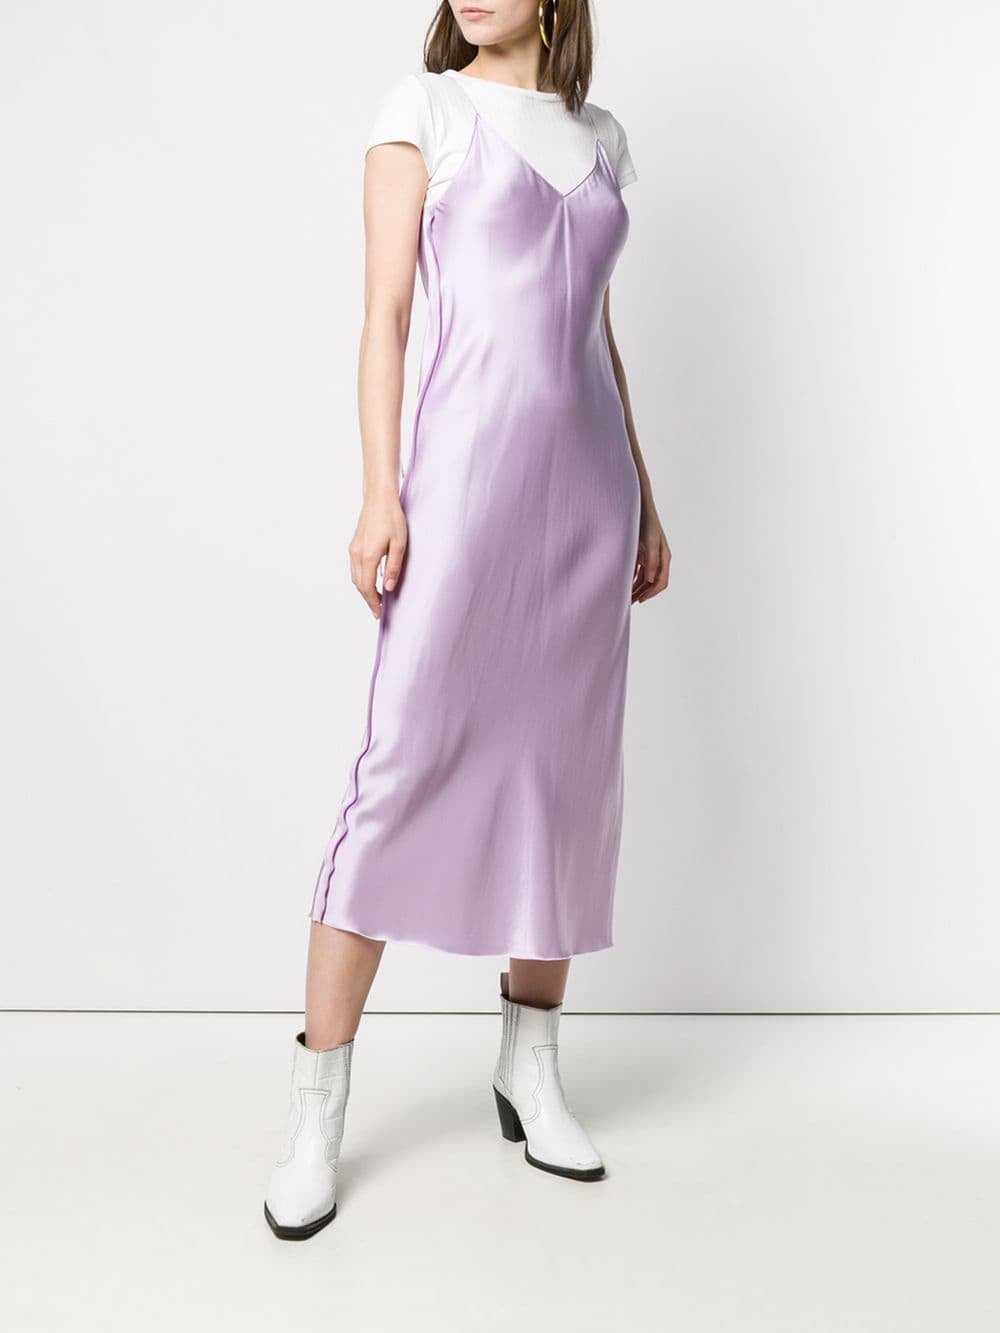 helmut lang purple dress